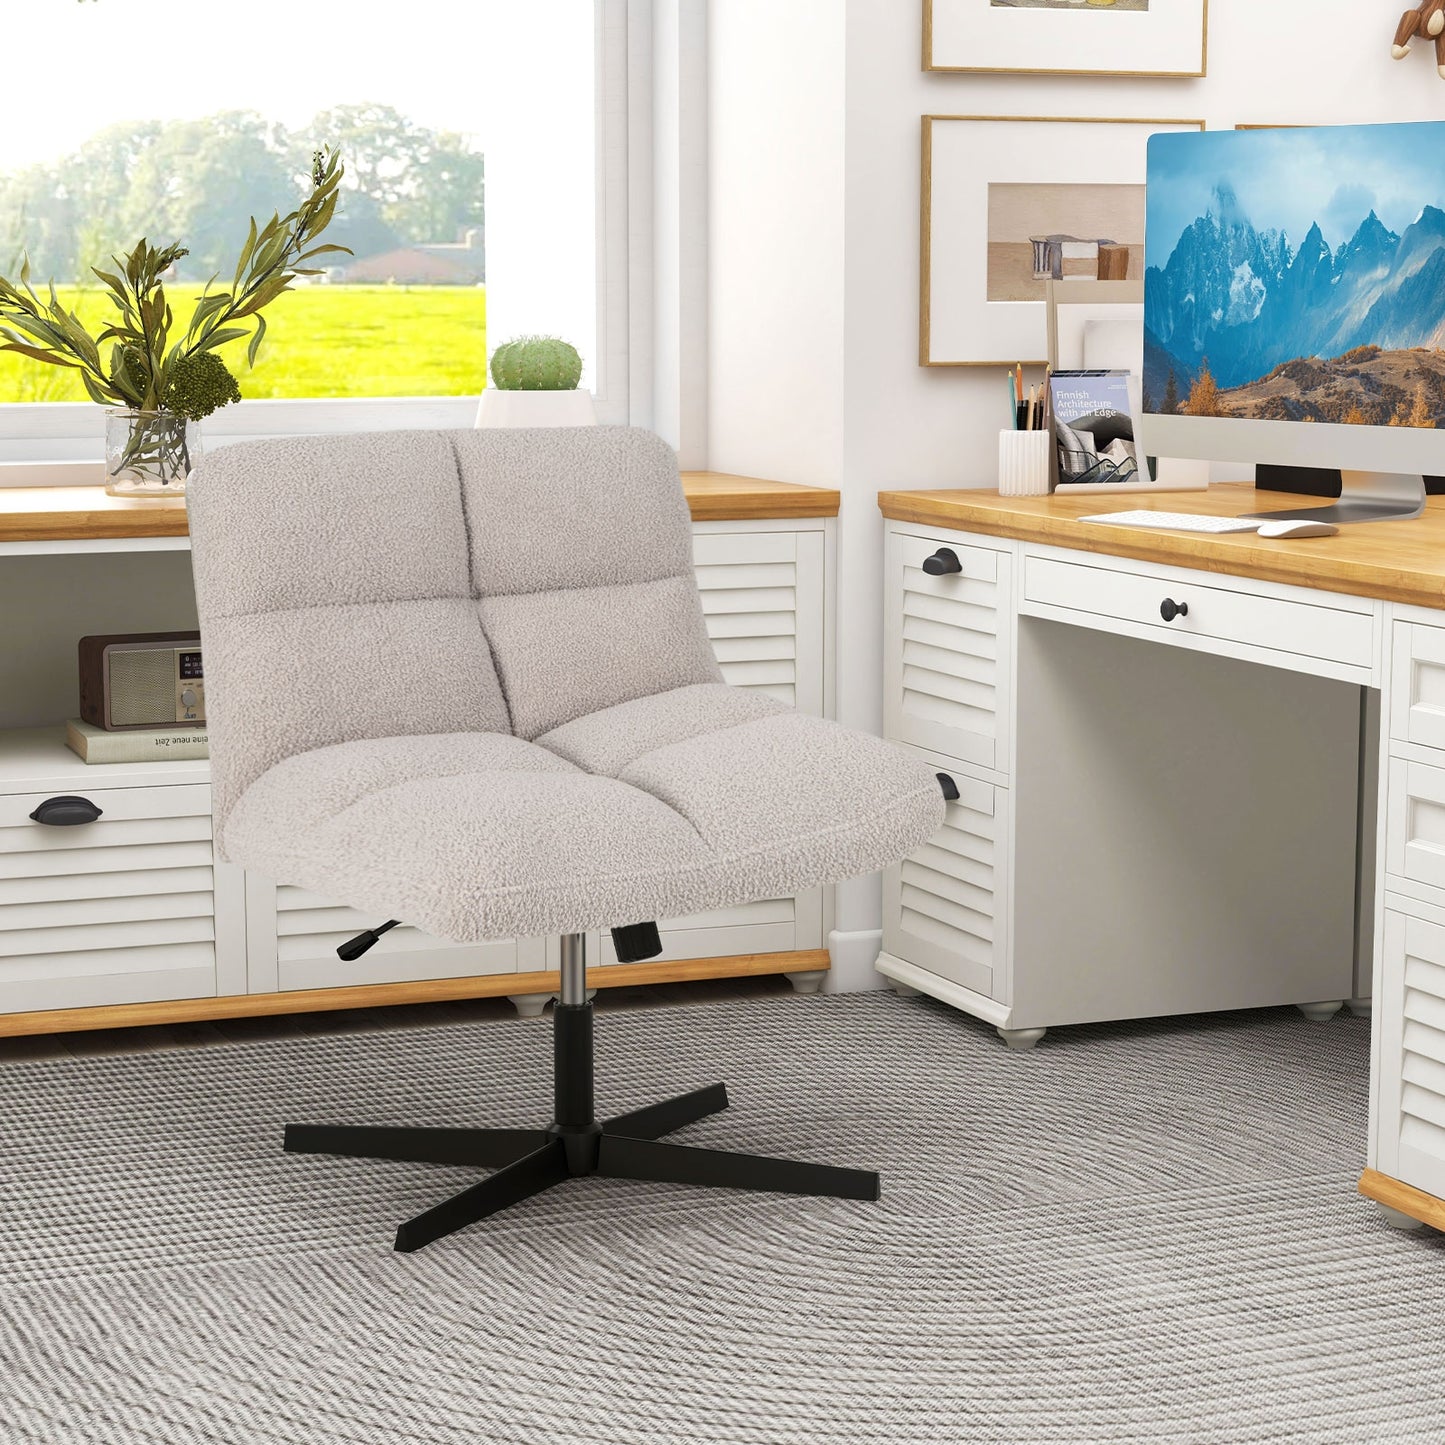 Office Armless Chair Cross Legged with Imitation Lamb Fleece and Adjustable Height-Gray